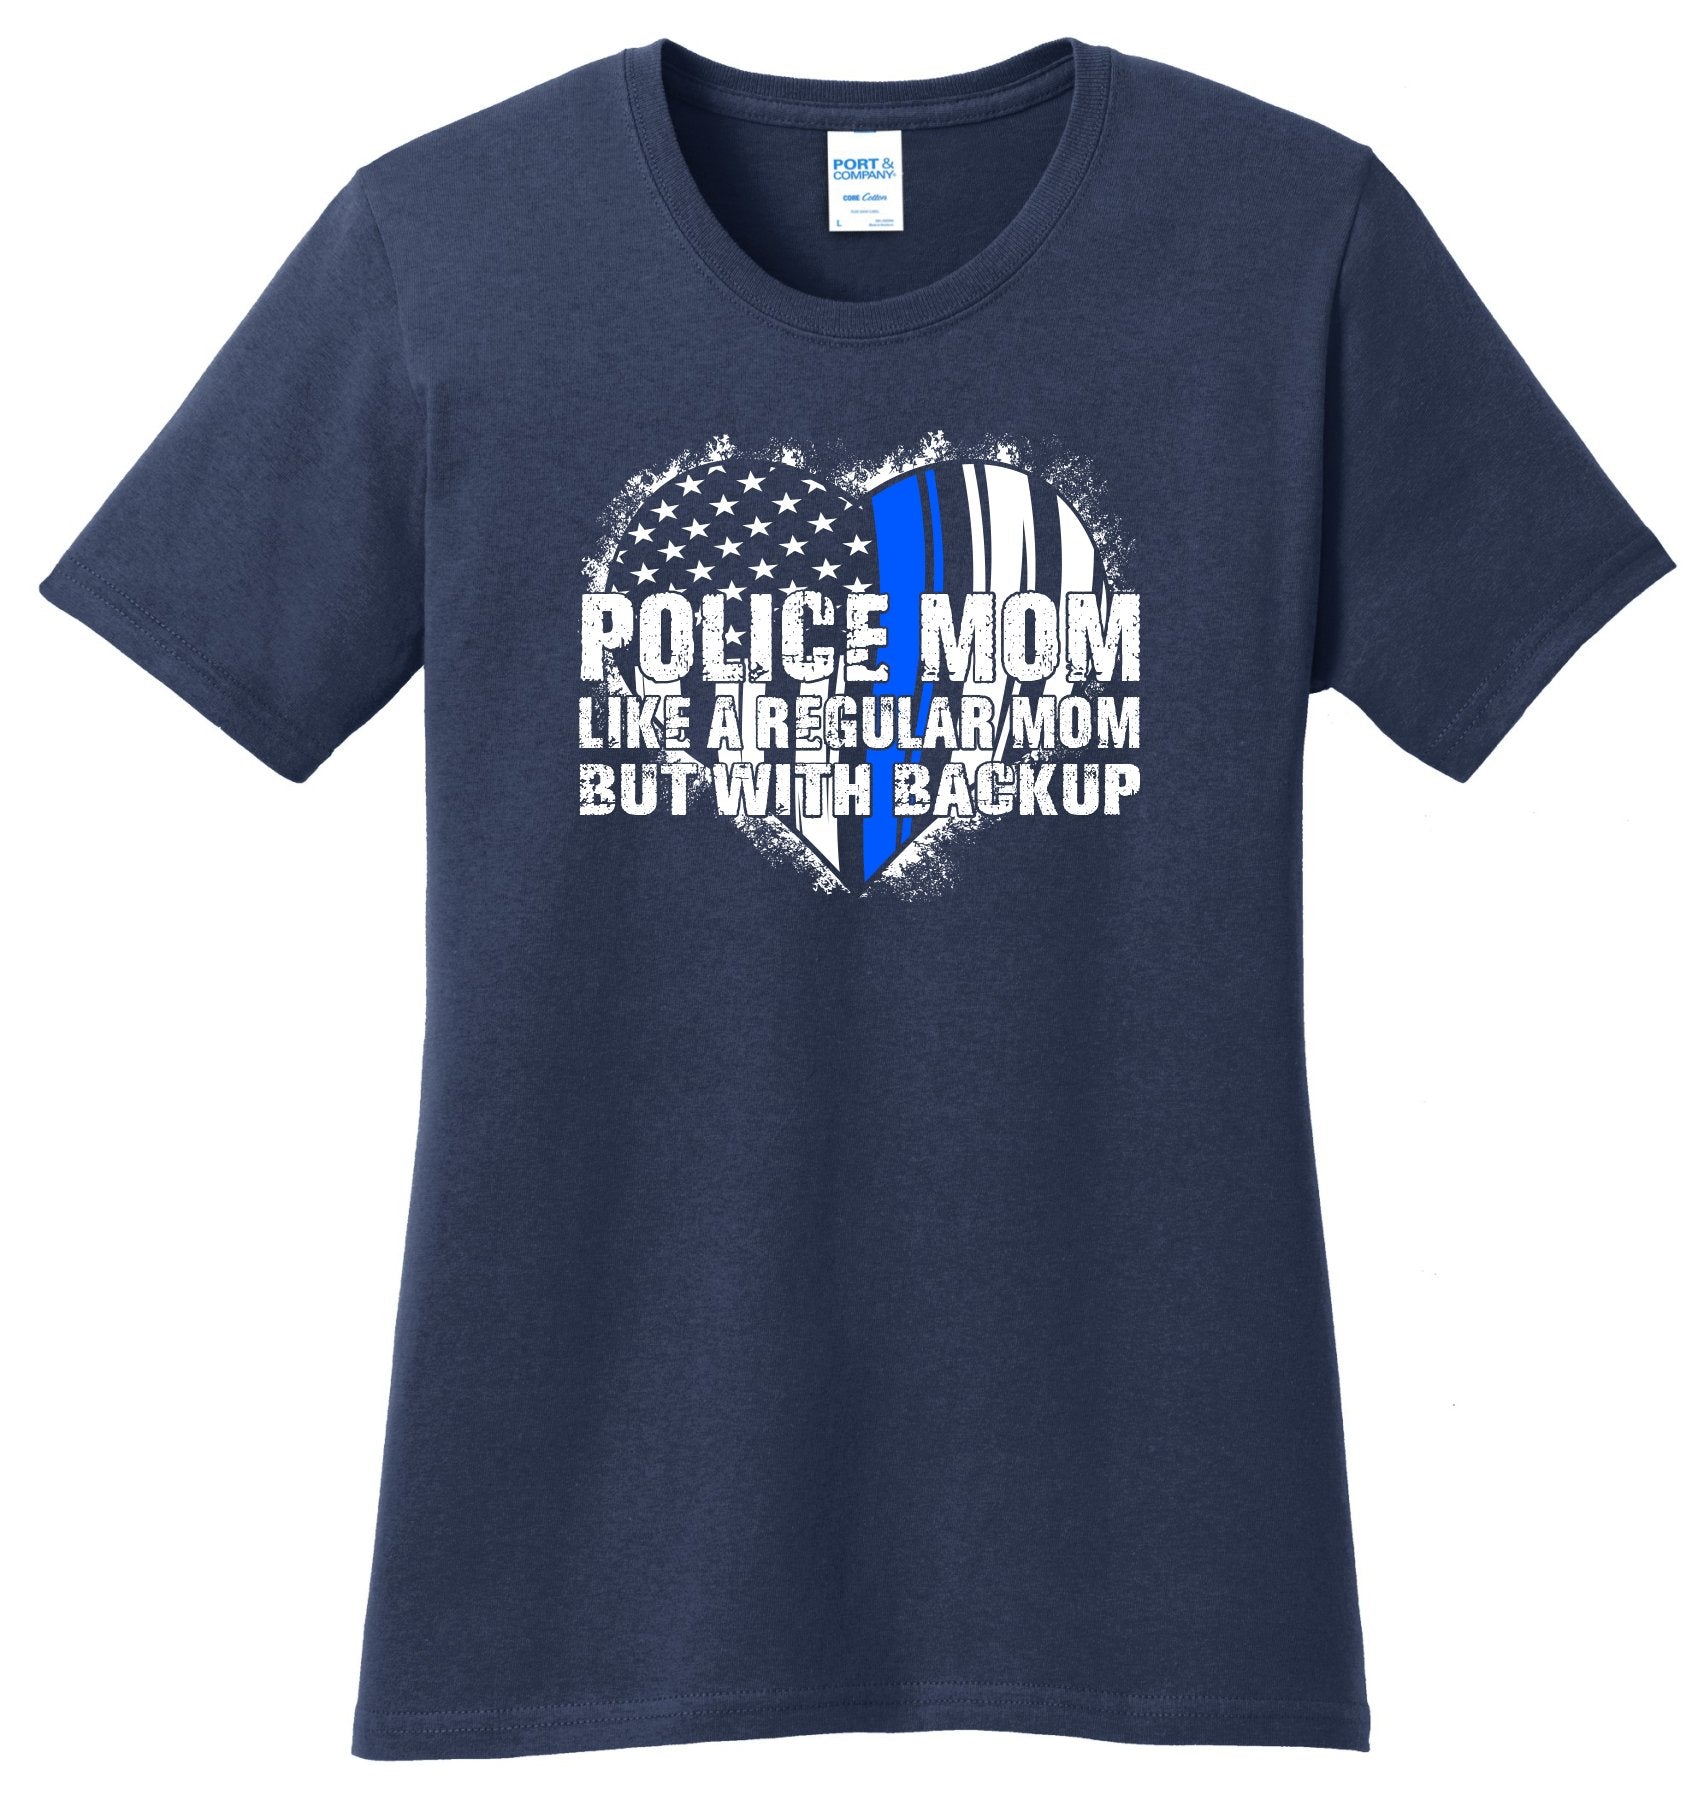 Police Mom Shirt Blue Line Flag Heart - SBS T Shop